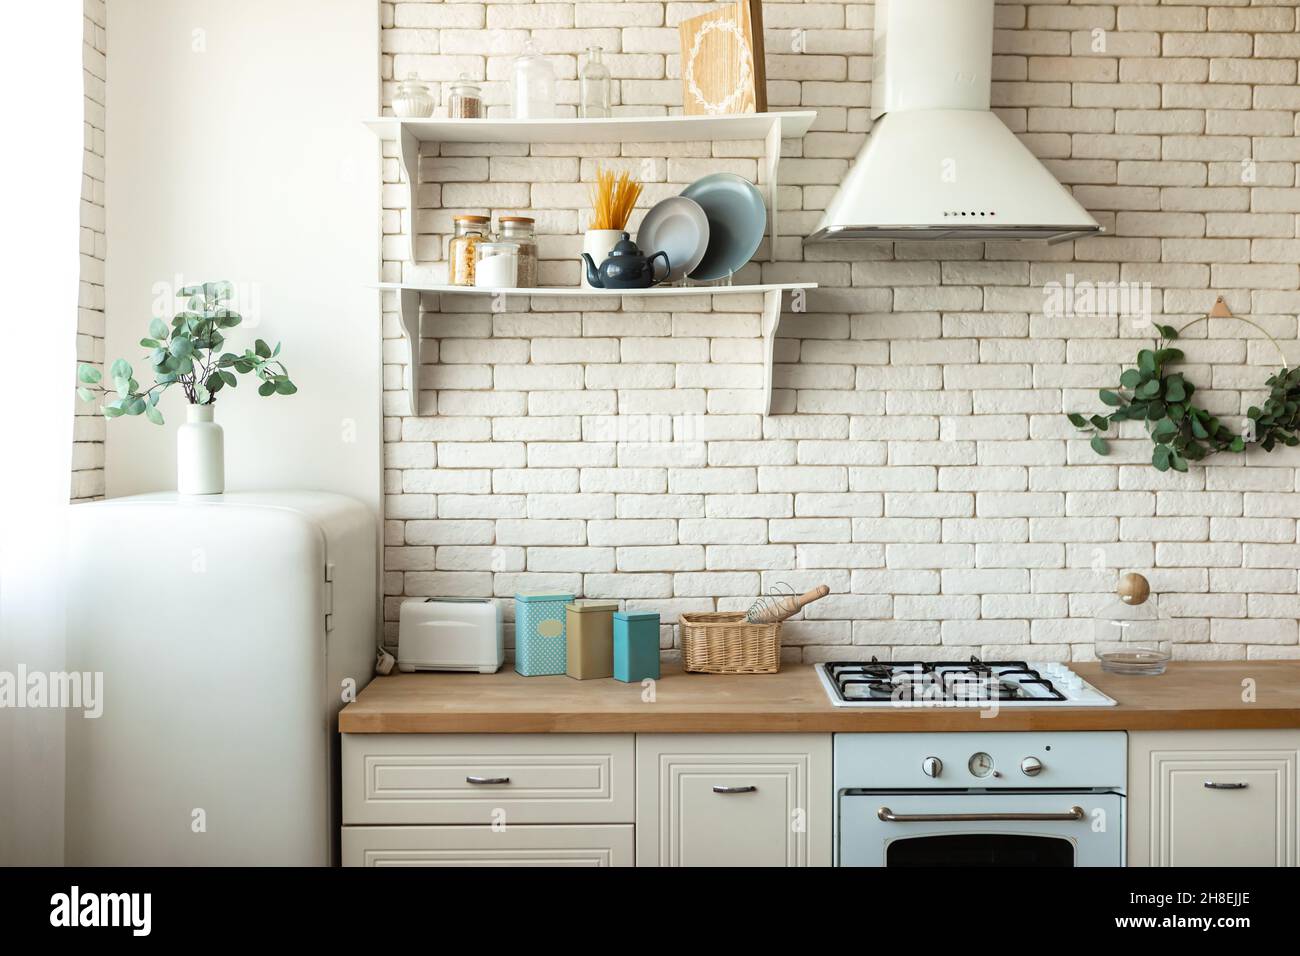 Modern Scandinavian kitchen interior with light furniture, household items near brick wall. Home decor concept Stock Photo